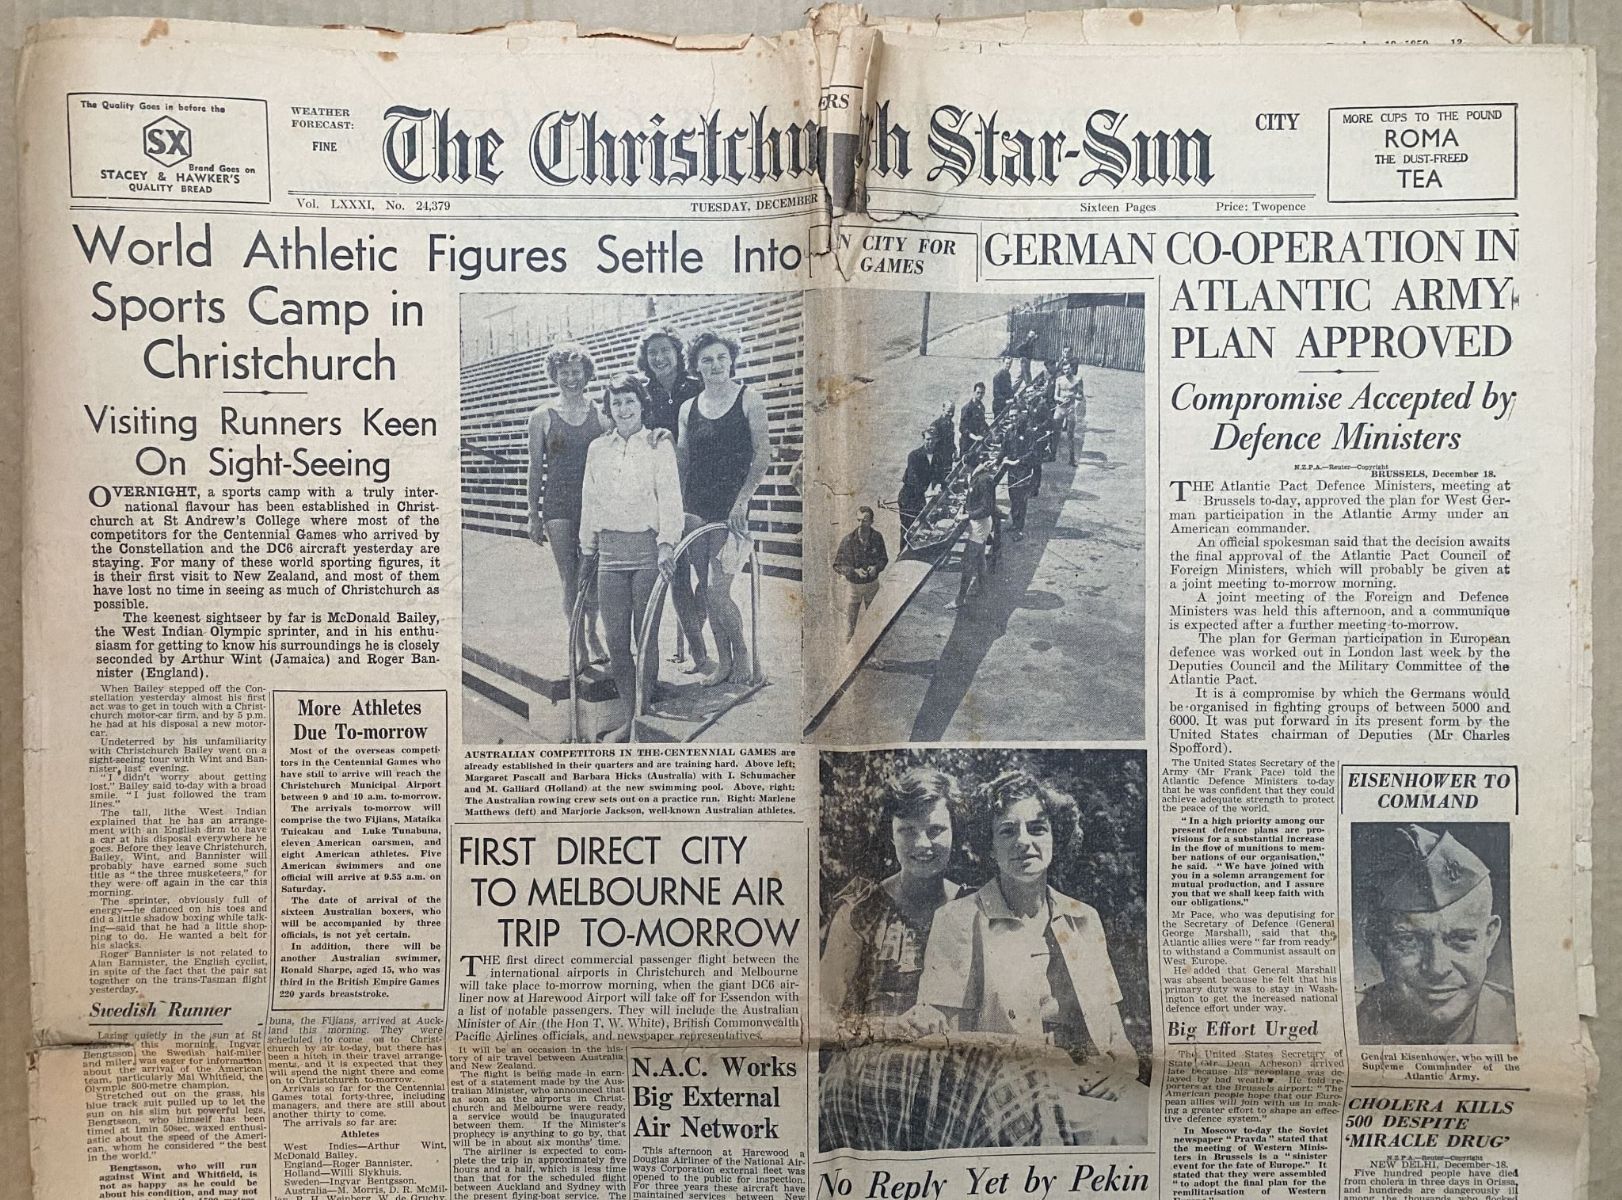 OLD NEWSPAPER: The Christchurch Star-Sun, 19 December 1950